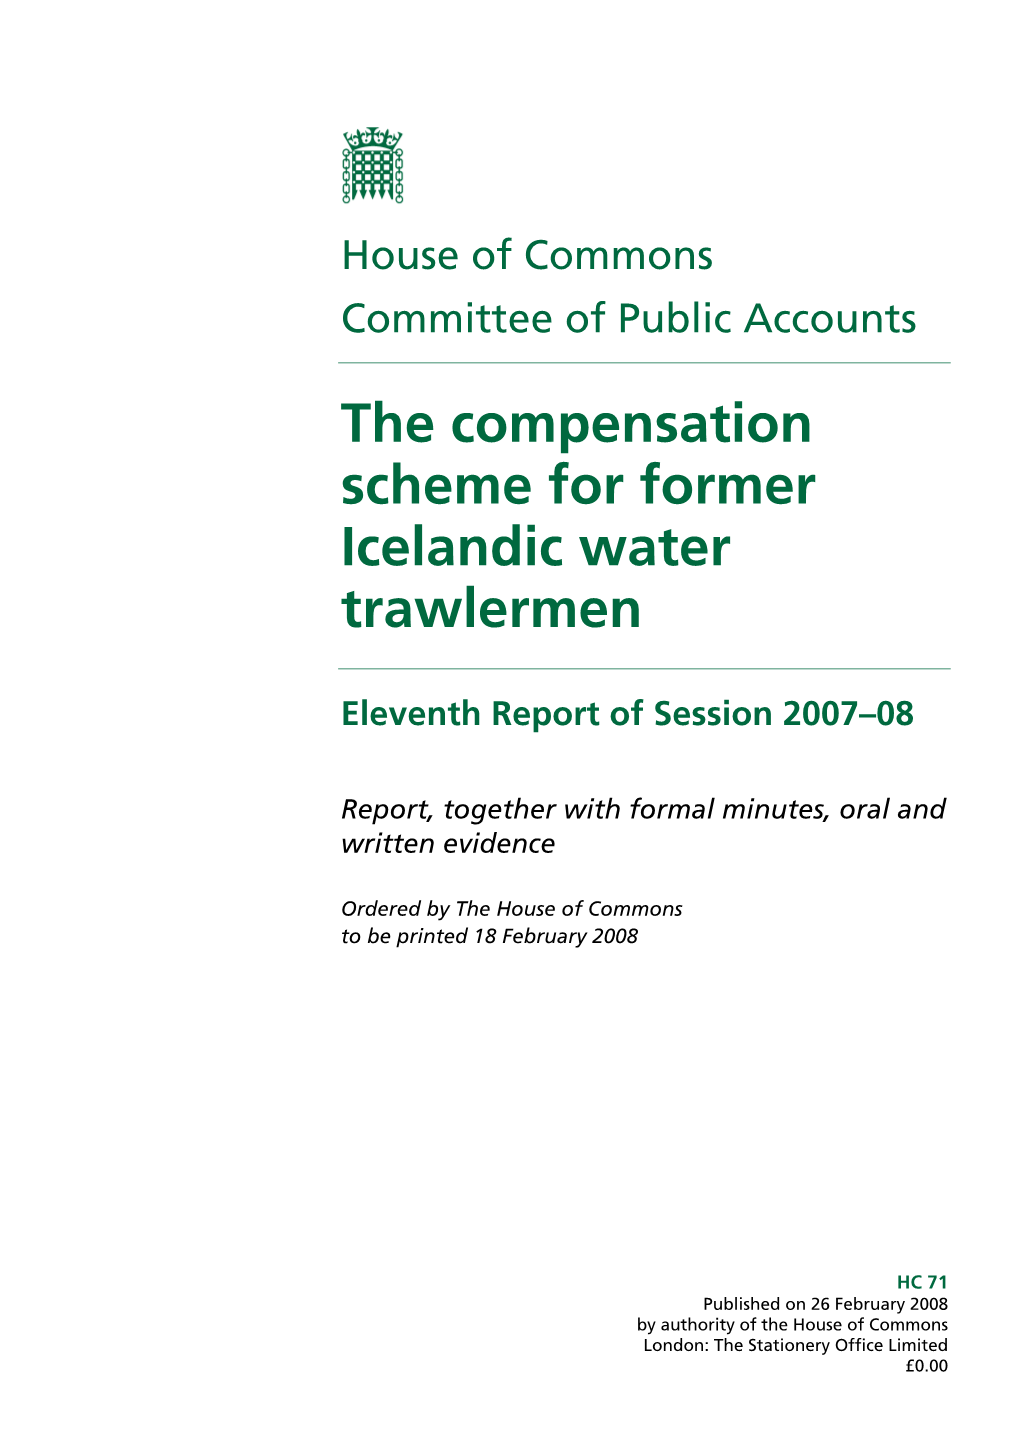 The Compensation Scheme for Former Icelandic Water Trawlermen